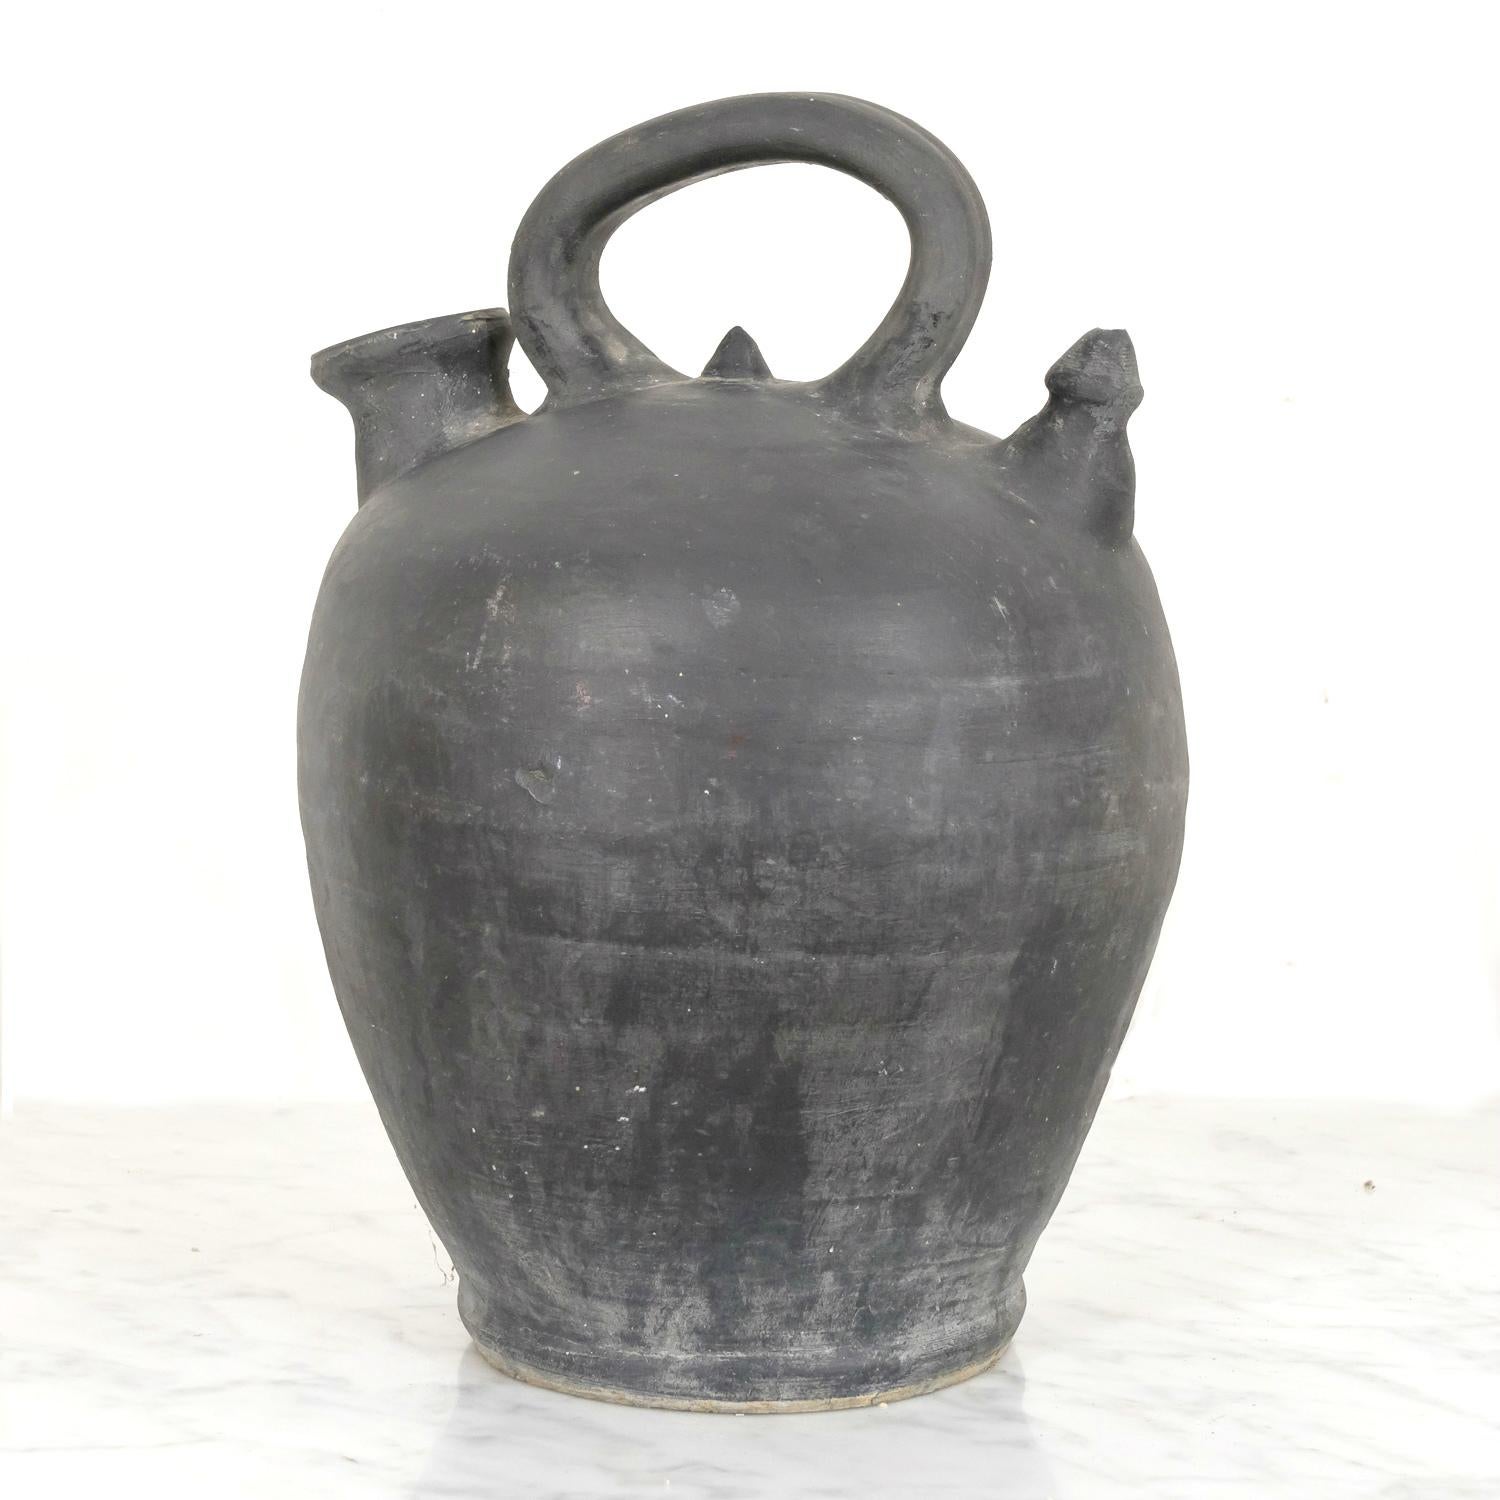 Unglazed 19th Century Spanish Catalan Black Clay Botijo or Water Jug from Verdu